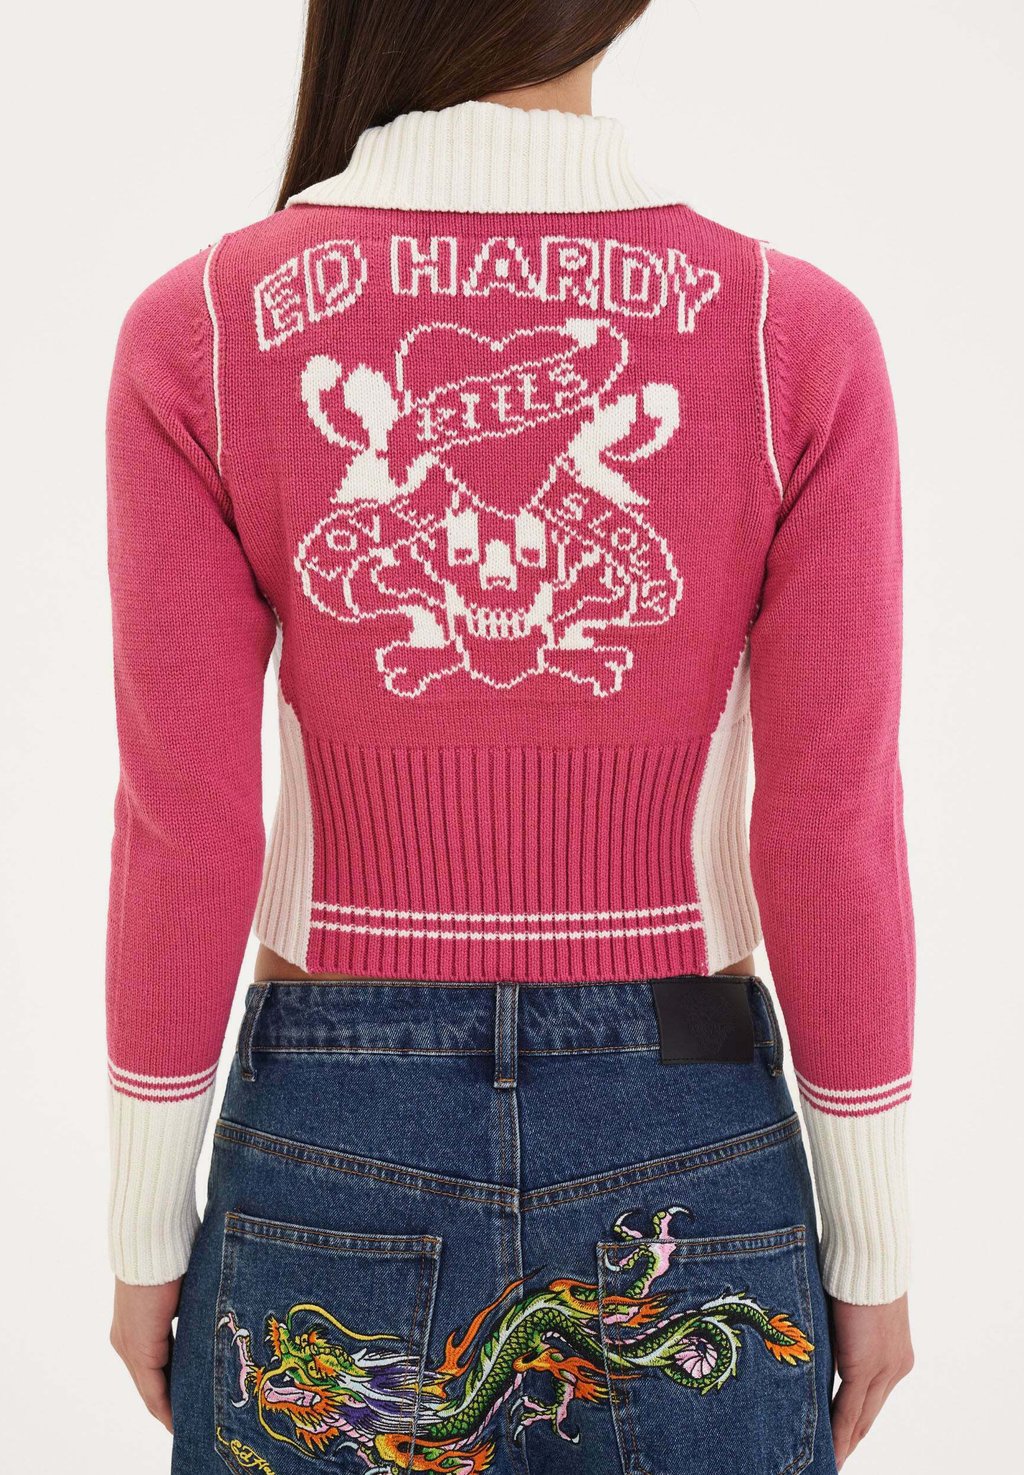 Кардиган Ed Hardy, розовый толстовка с капюшоном ed hardy розовый